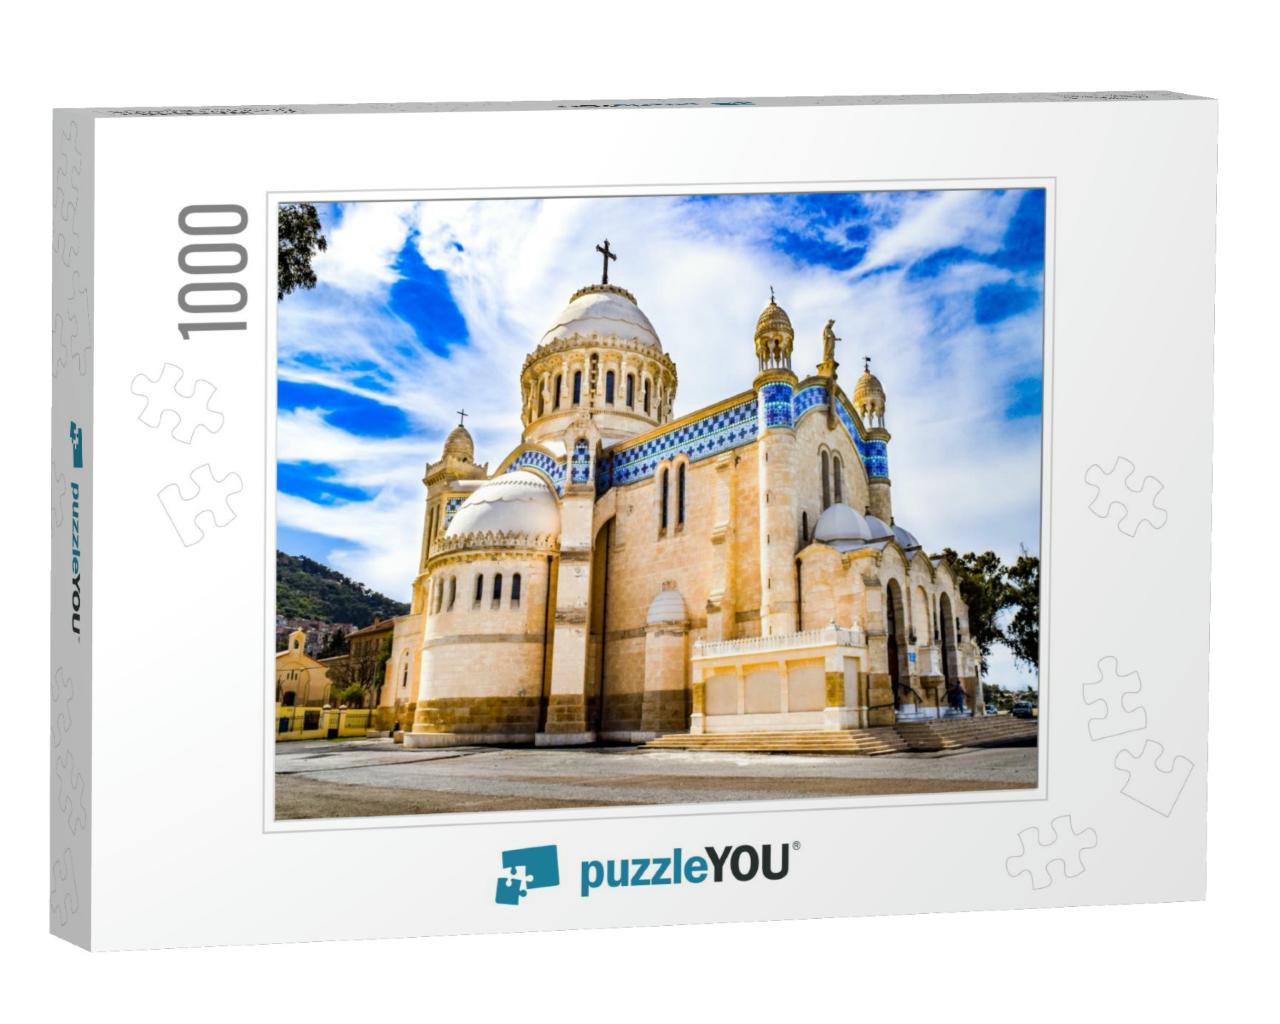 Famous Catholic Church [Notre Dame Dafrique] - Algiers, A... Jigsaw Puzzle with 1000 pieces